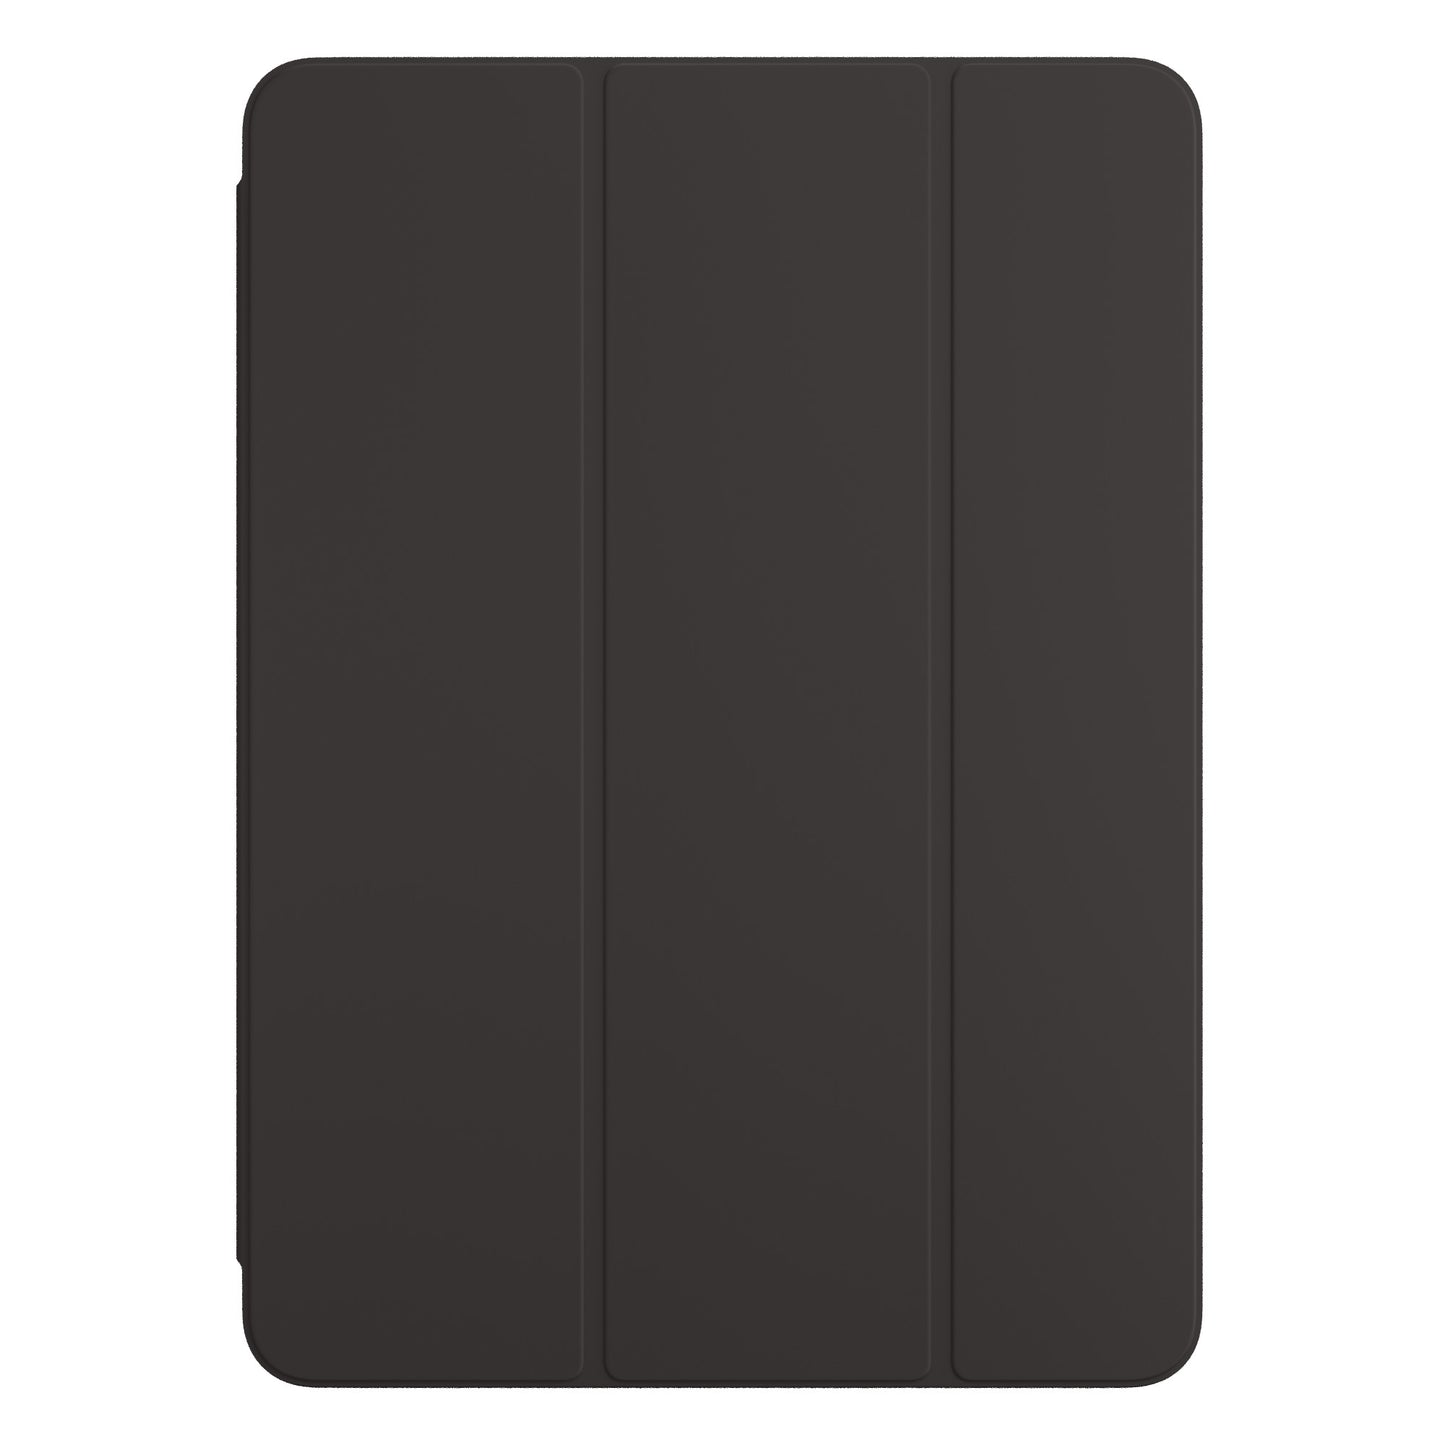 Smart Folio for iPad Pro 12.9-inch